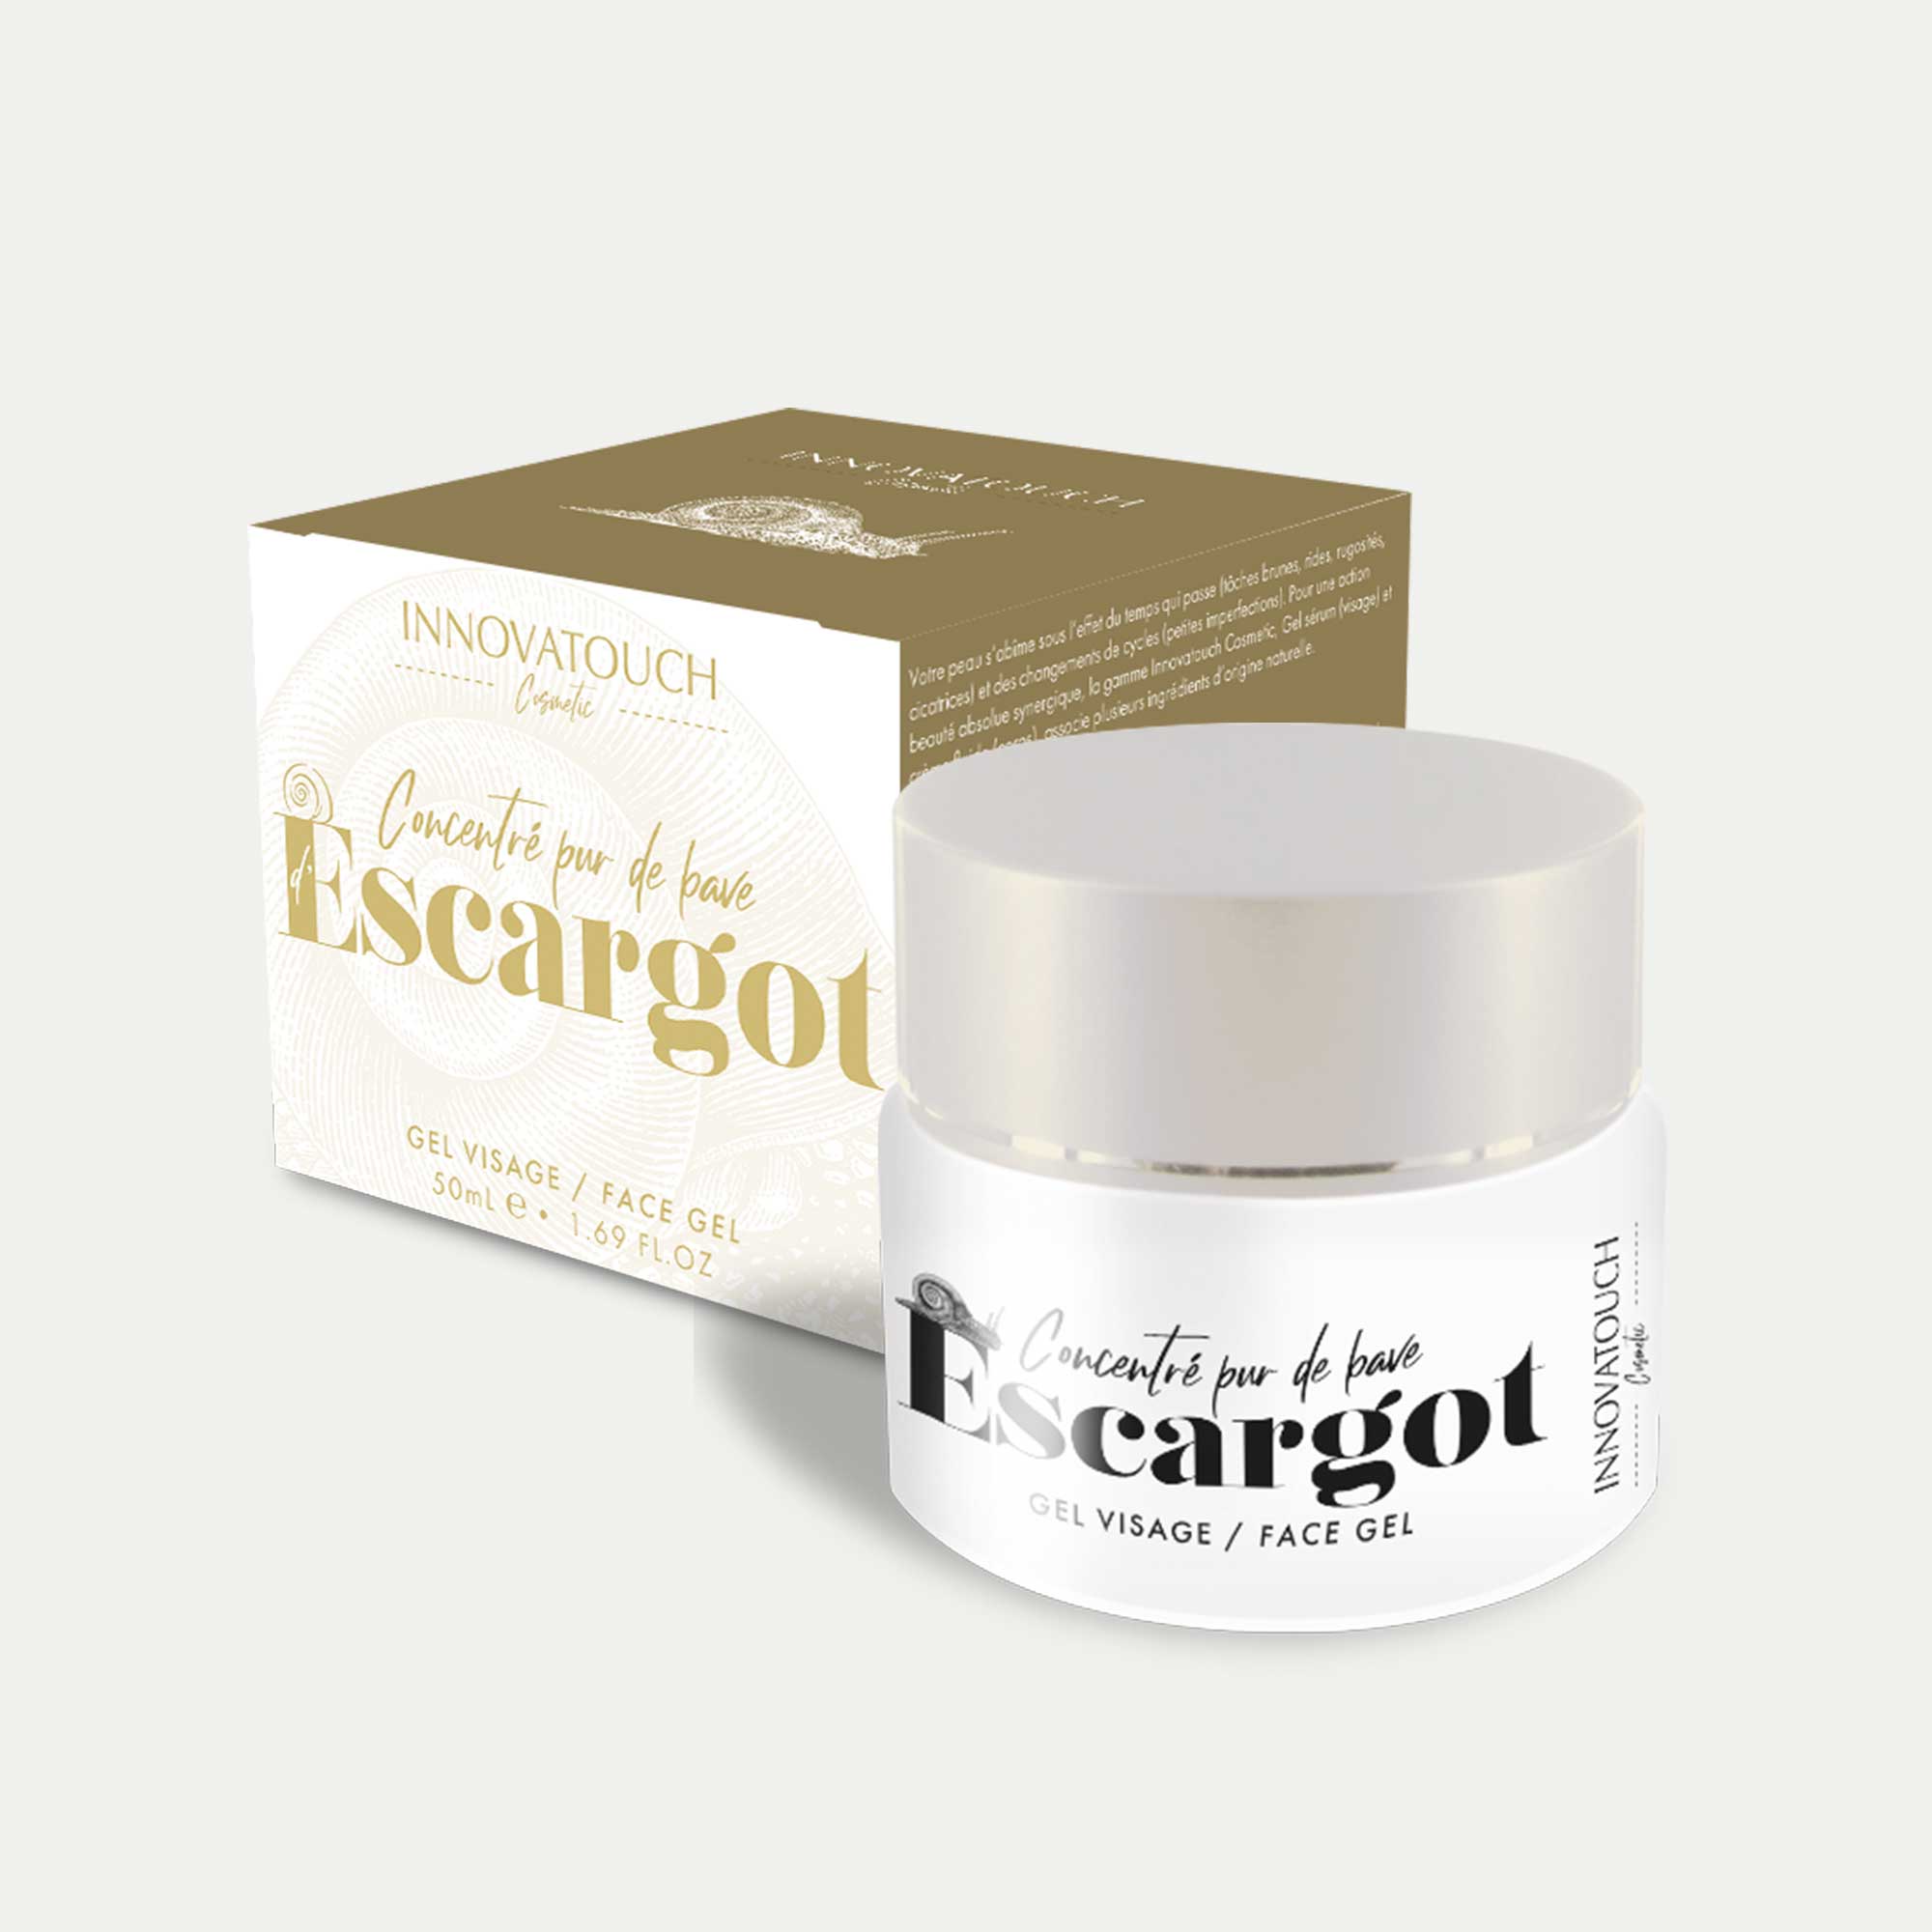 ESCARGOT-gel-visage-1-innovatouch-cosmetic